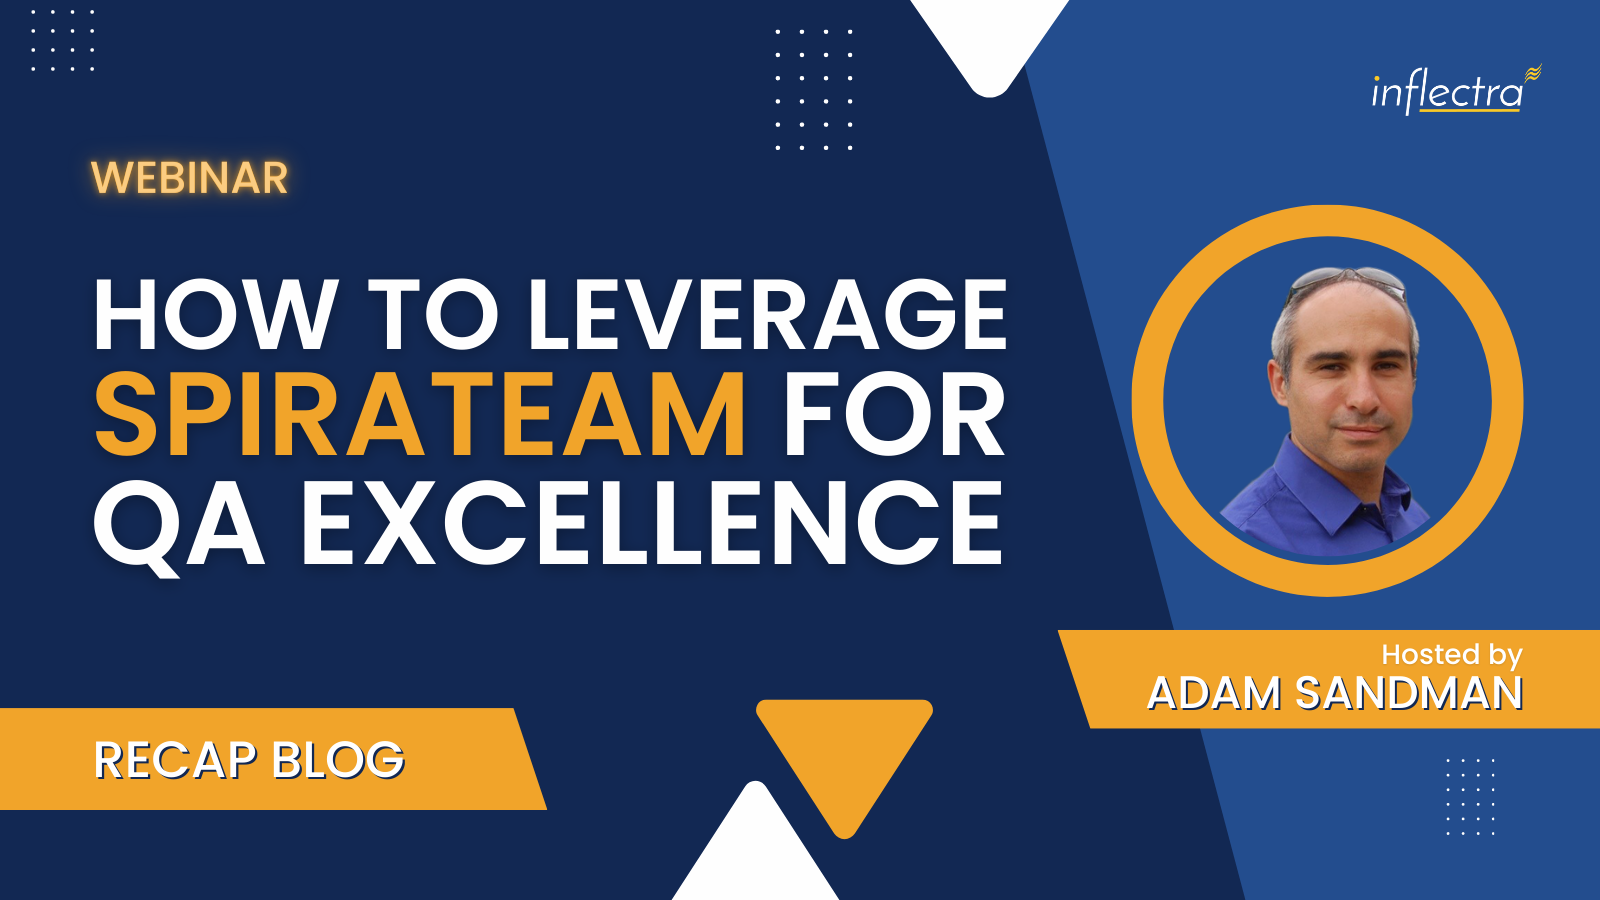 webinar-recap-blog-how-to-leverage-spirateam-for-qa-excellence-with-adam-sandman-image